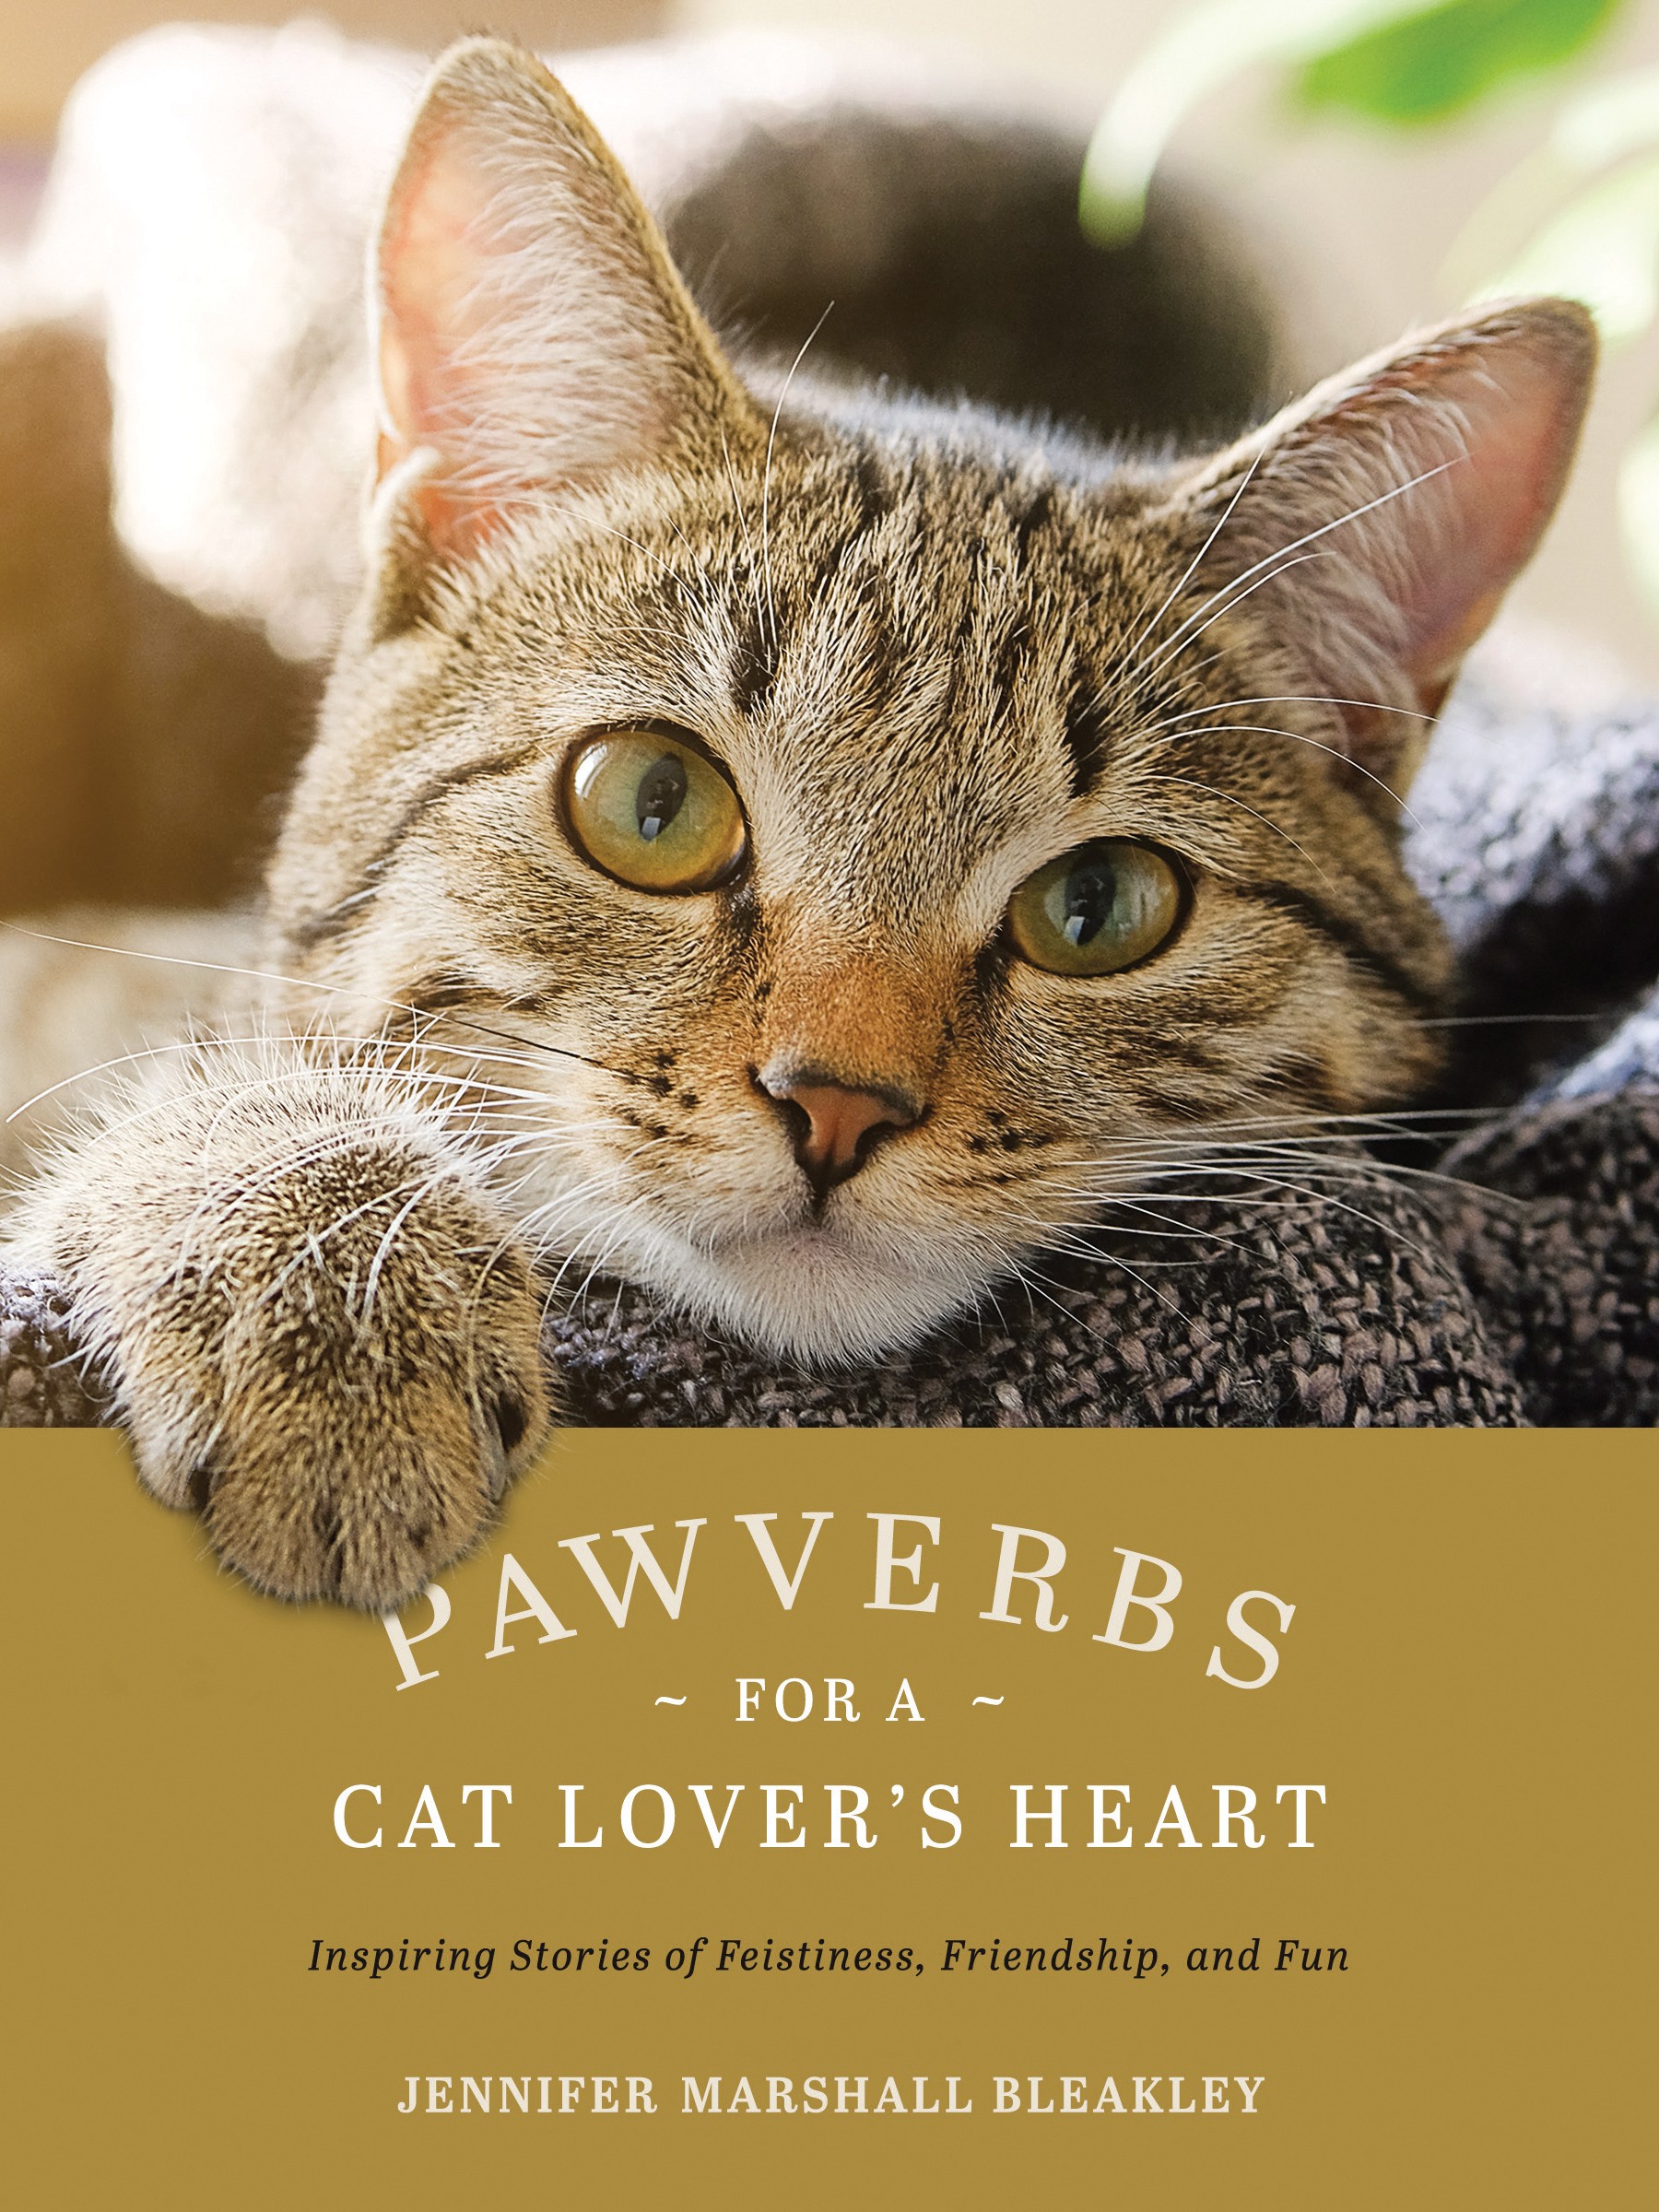  Pawverbs for a Cat Lover's Heart - 9781496460271 - Bleakley, Jennifer Marshall